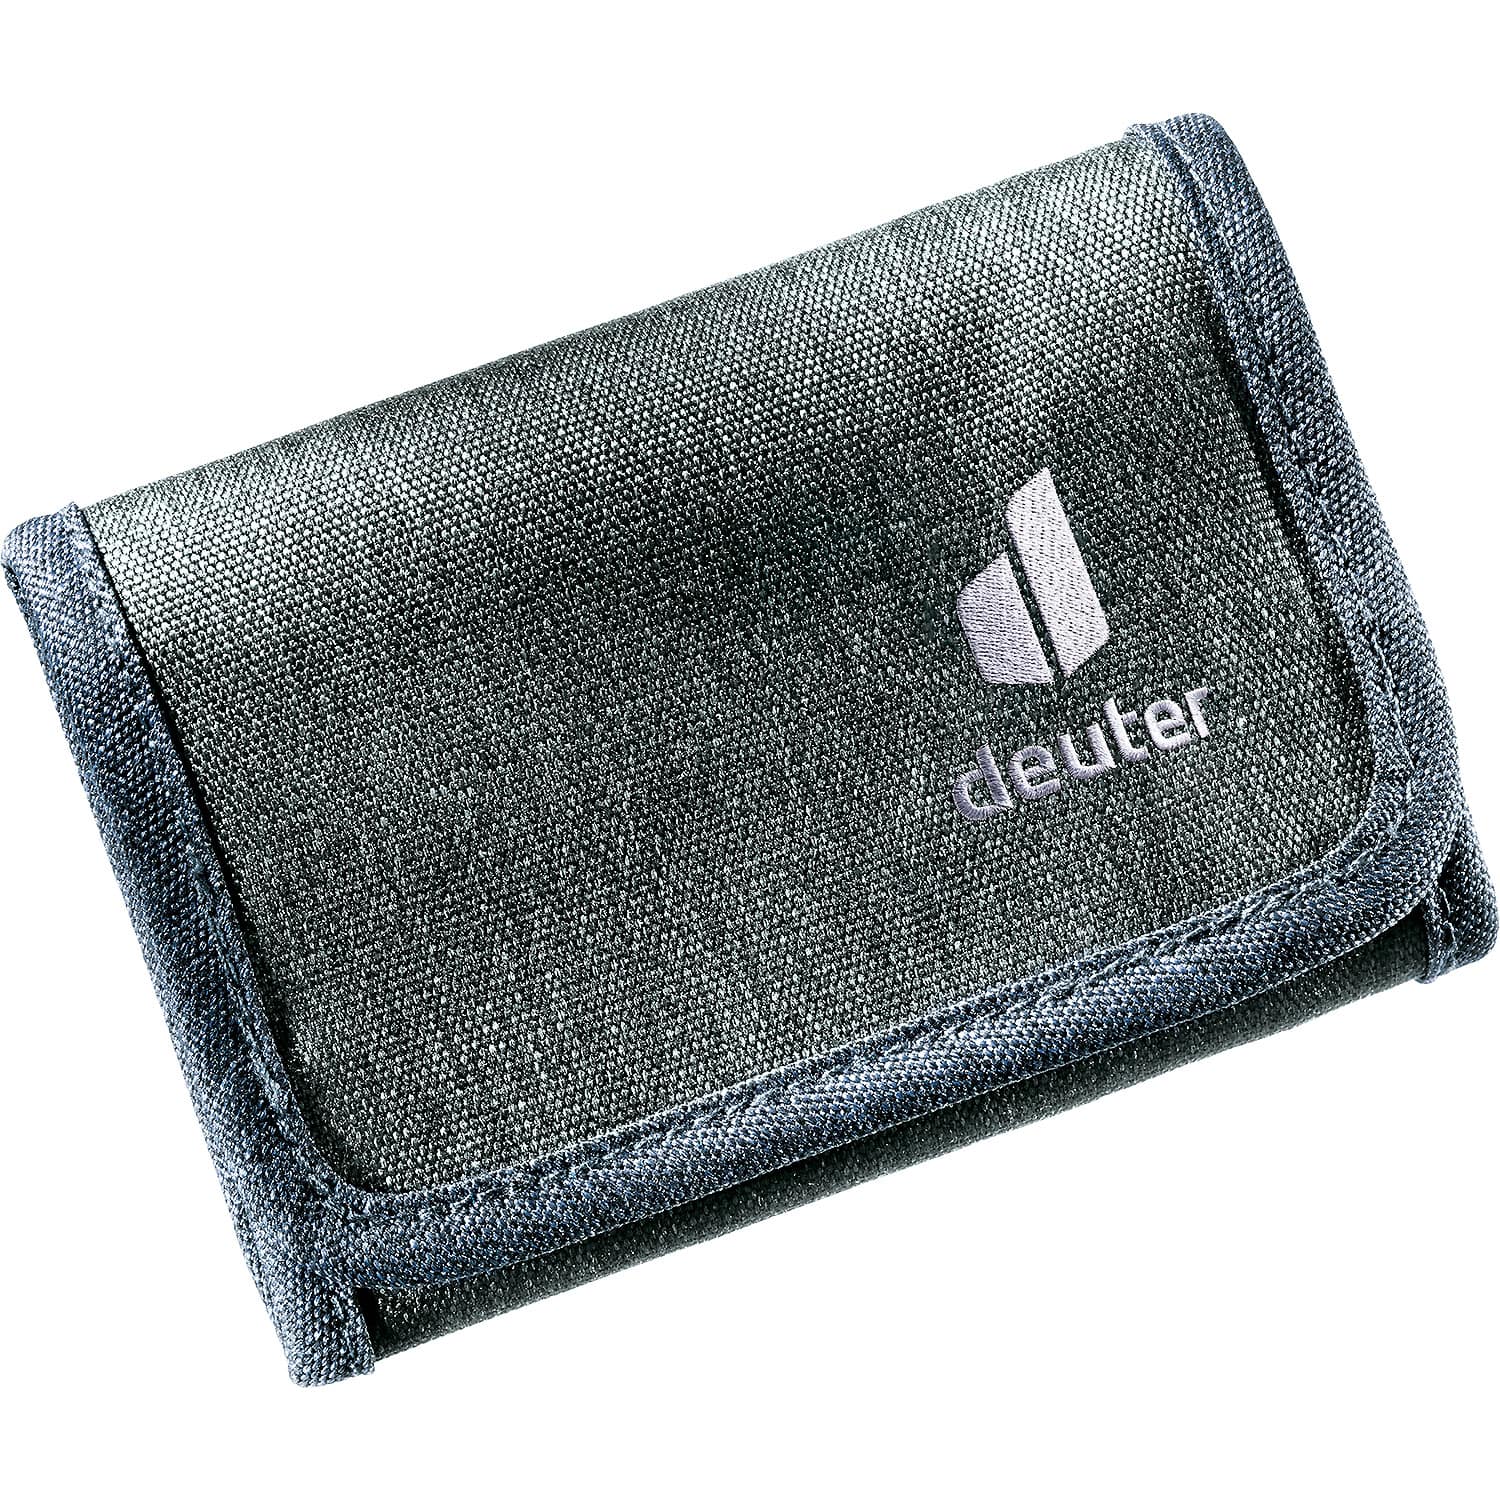 Unisex Deuter Travel Wallet